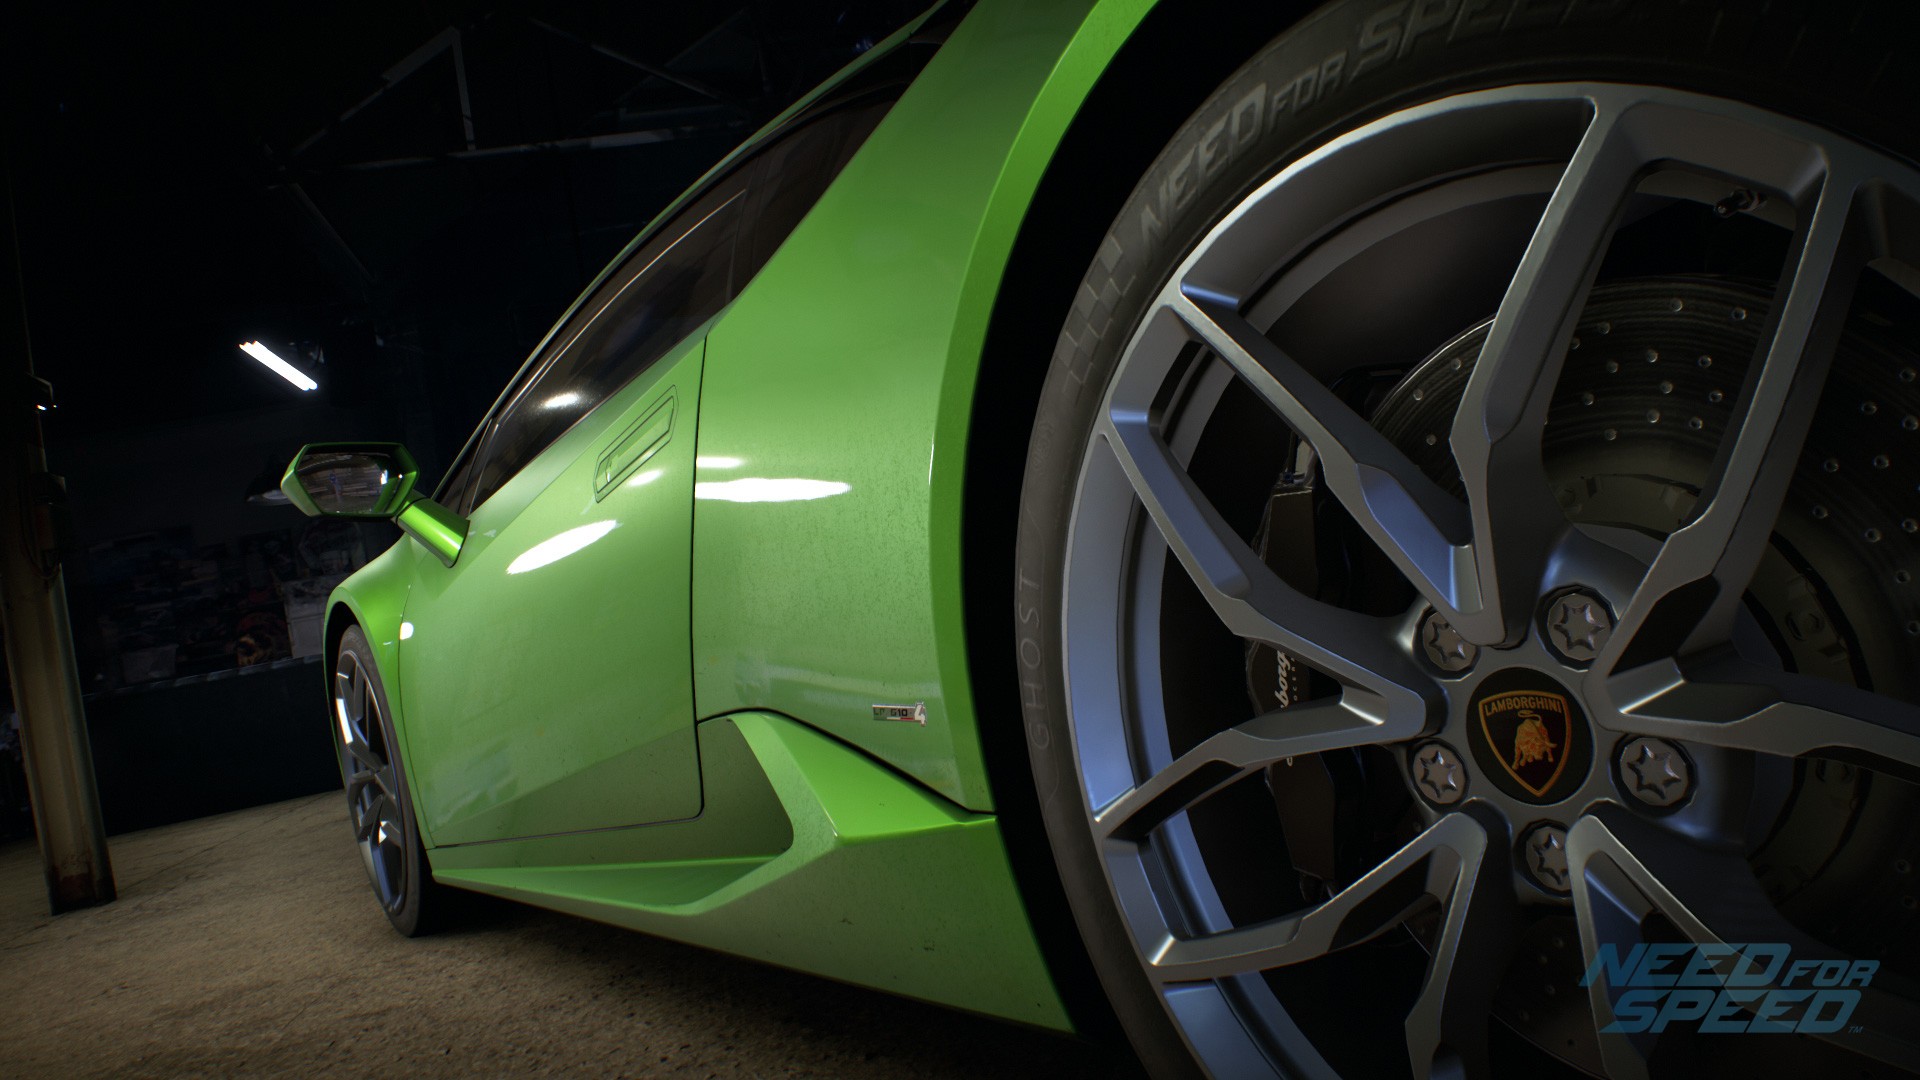 General 1920x1080 car green cars vehicle Need for Speed video games closeup Lamborghini